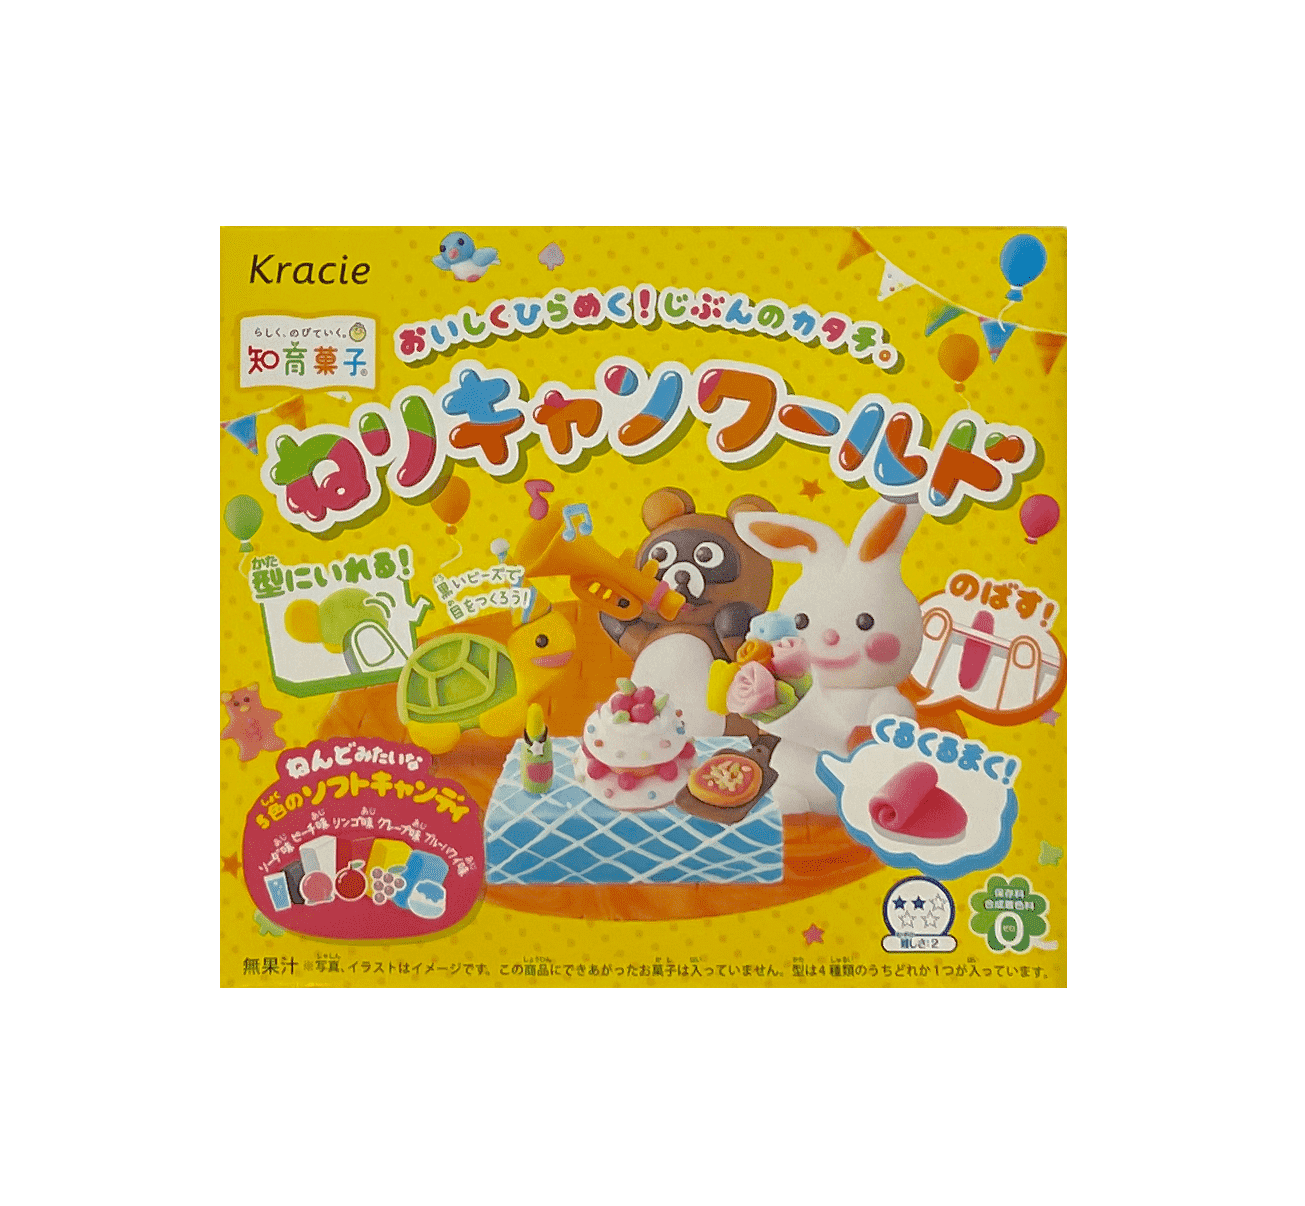 Popin' Cookin 迷你 Nerri 世界 系列 DIY 自制 可食用 71g Kracie 日本